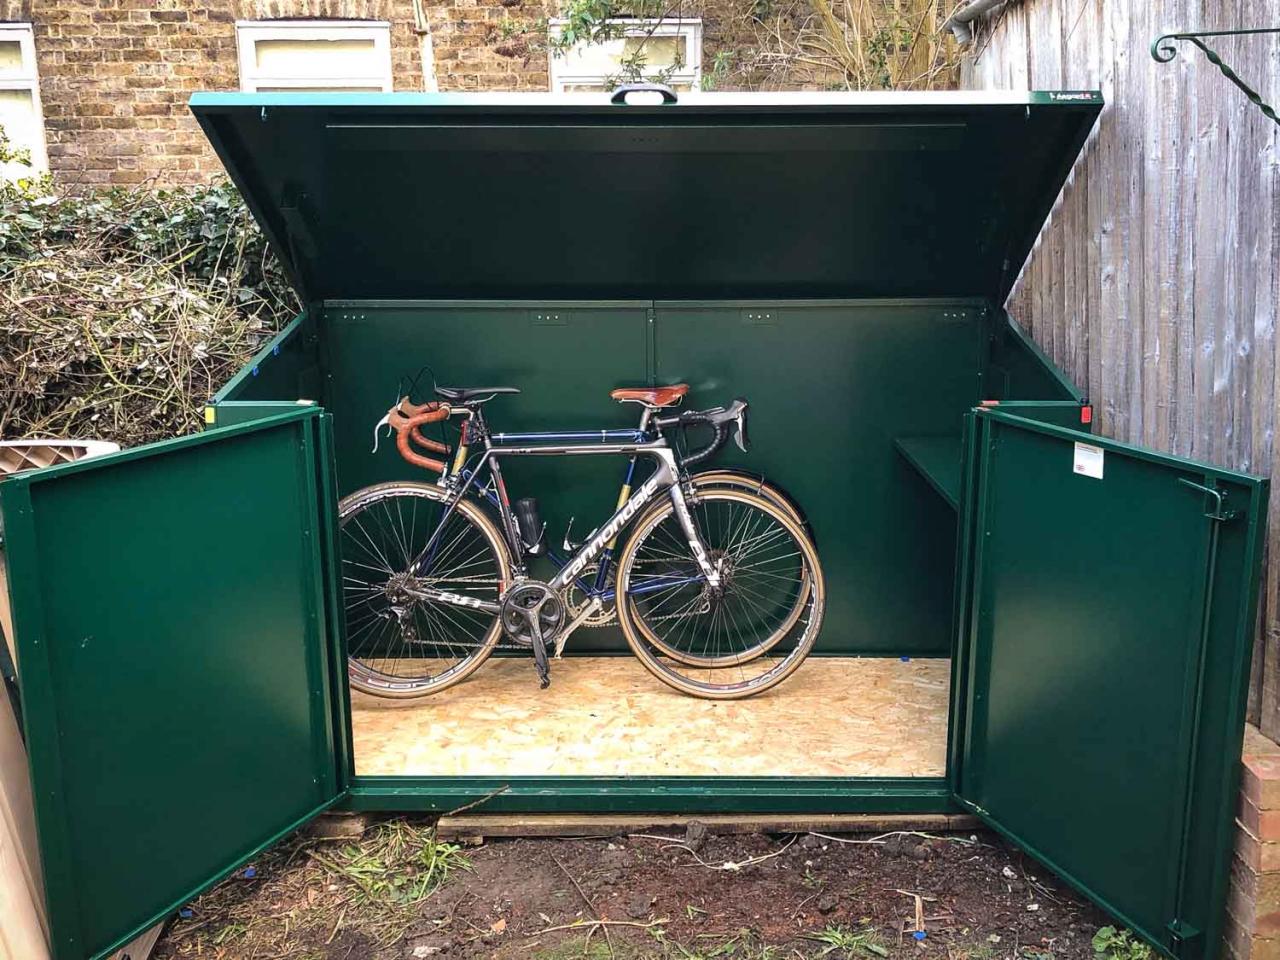 asgard outdoor bike storage sheds